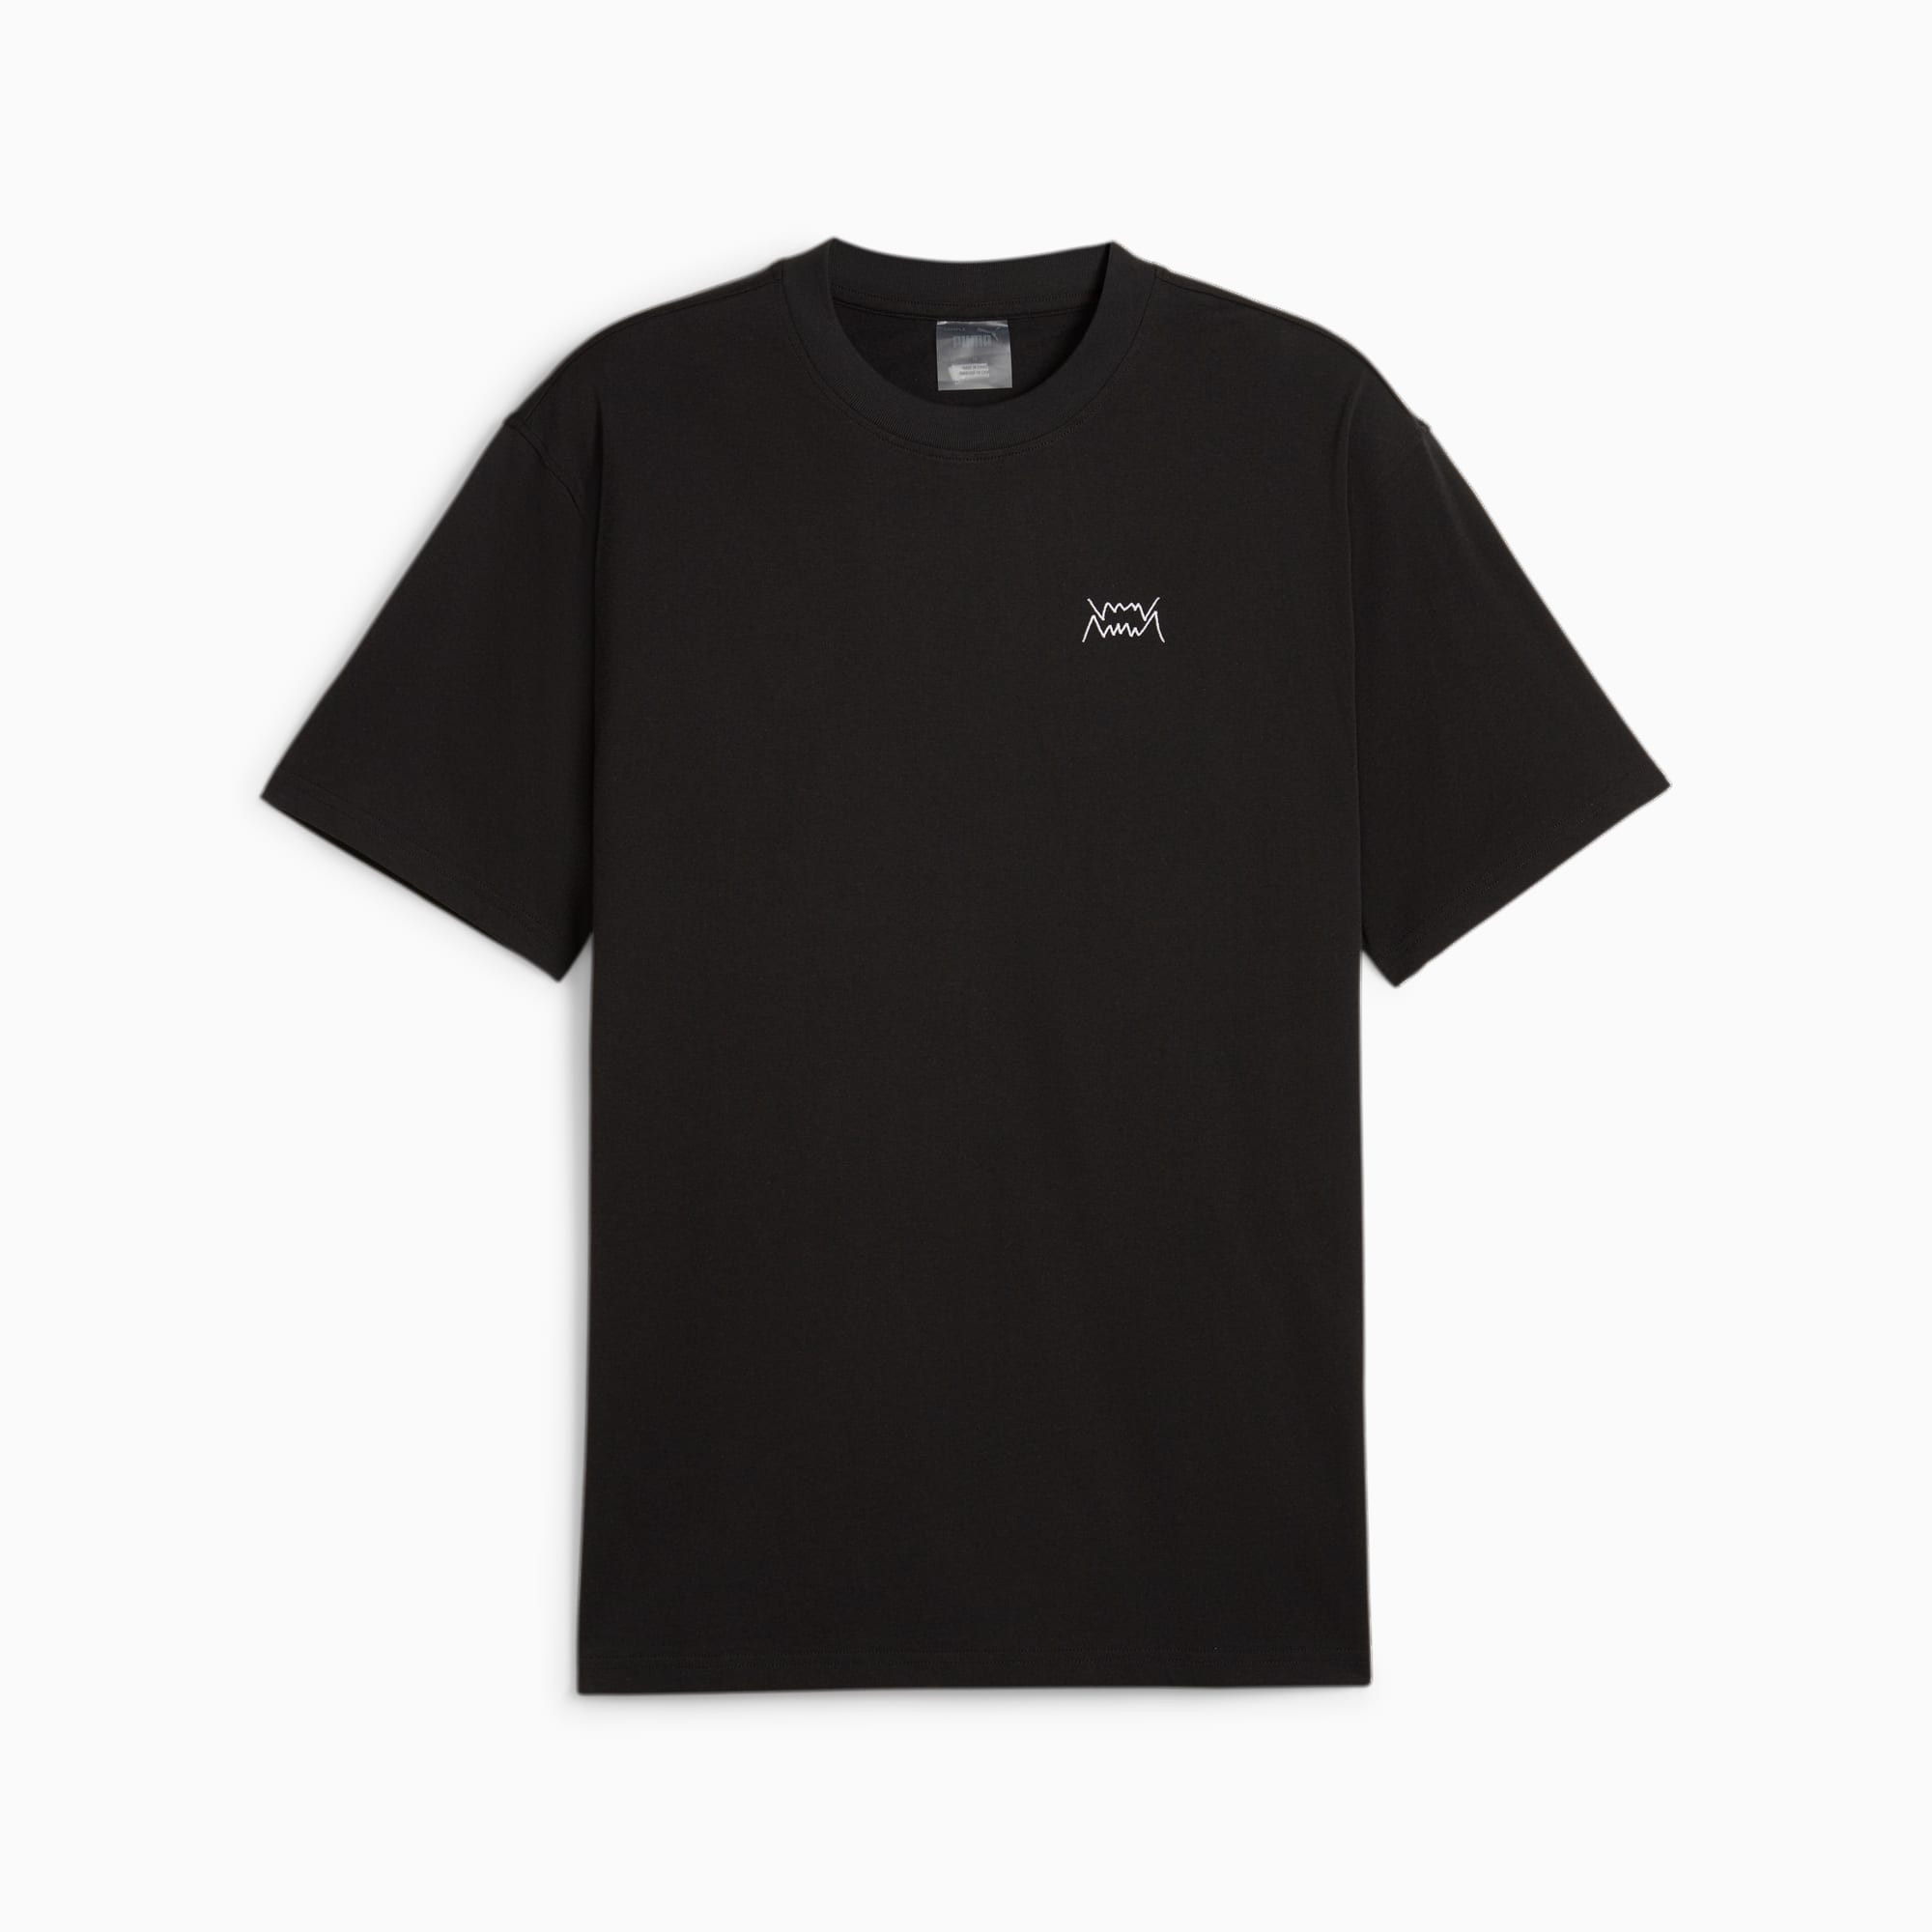 PUMA Jaws Emb Core Men's T-Shirt, Black, Size XS, Clothing